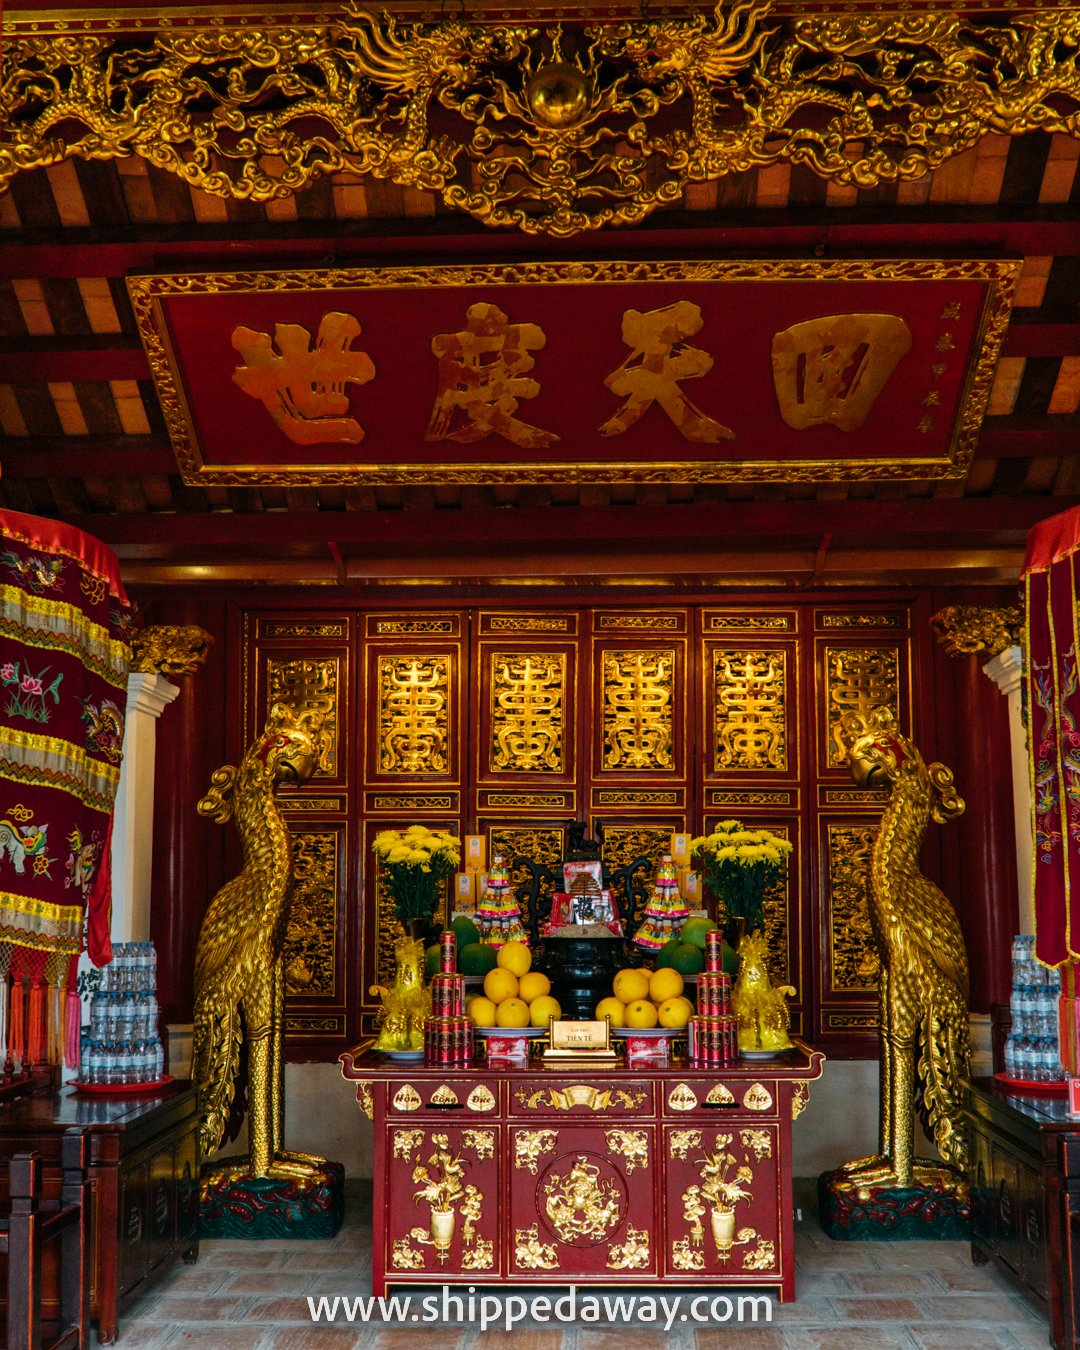 Altar and beautiful interior of Ngoc Son Temple, Hoan Kiem Lake, Hanoi Old Quarter